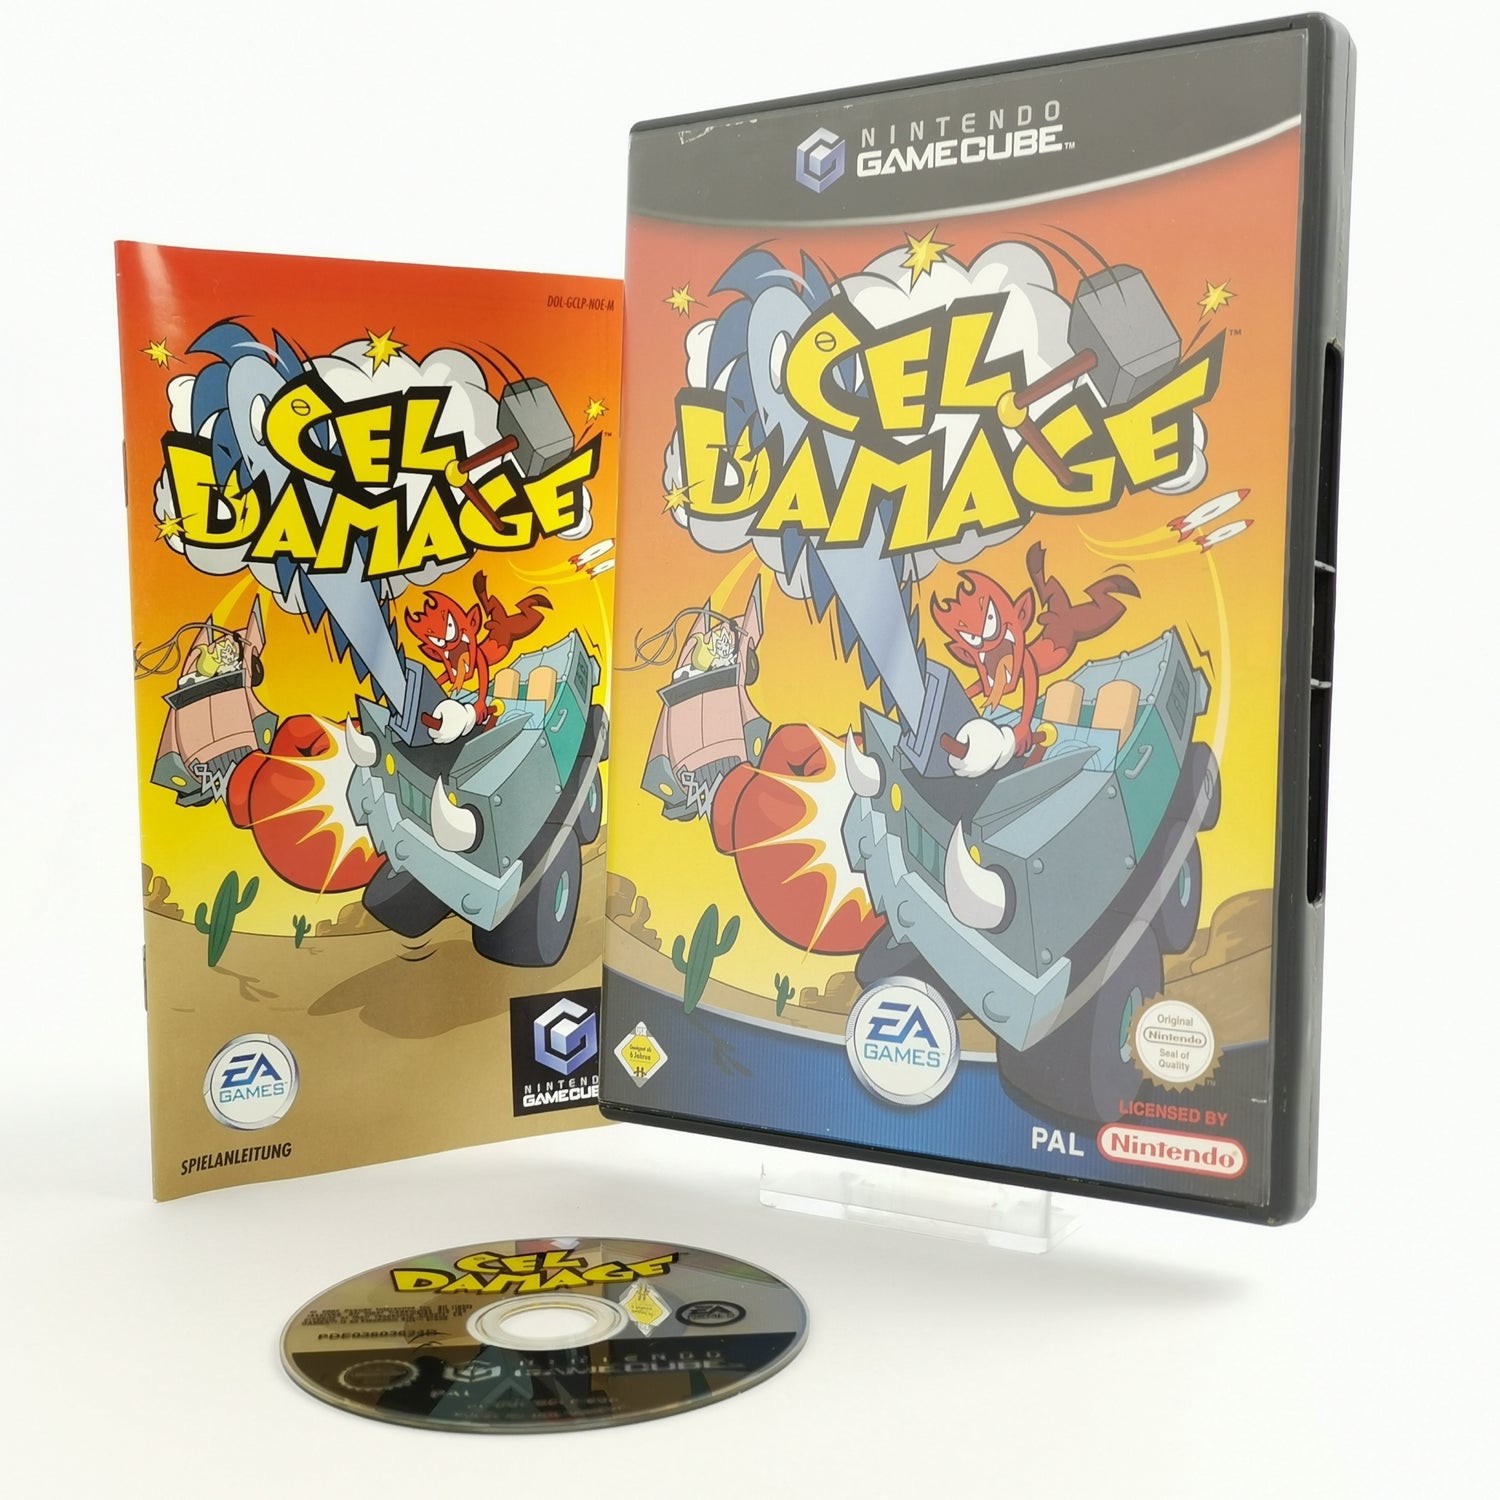 Nintendo Gamecube Game : Cel Damage | EA Games - German PAL version orig